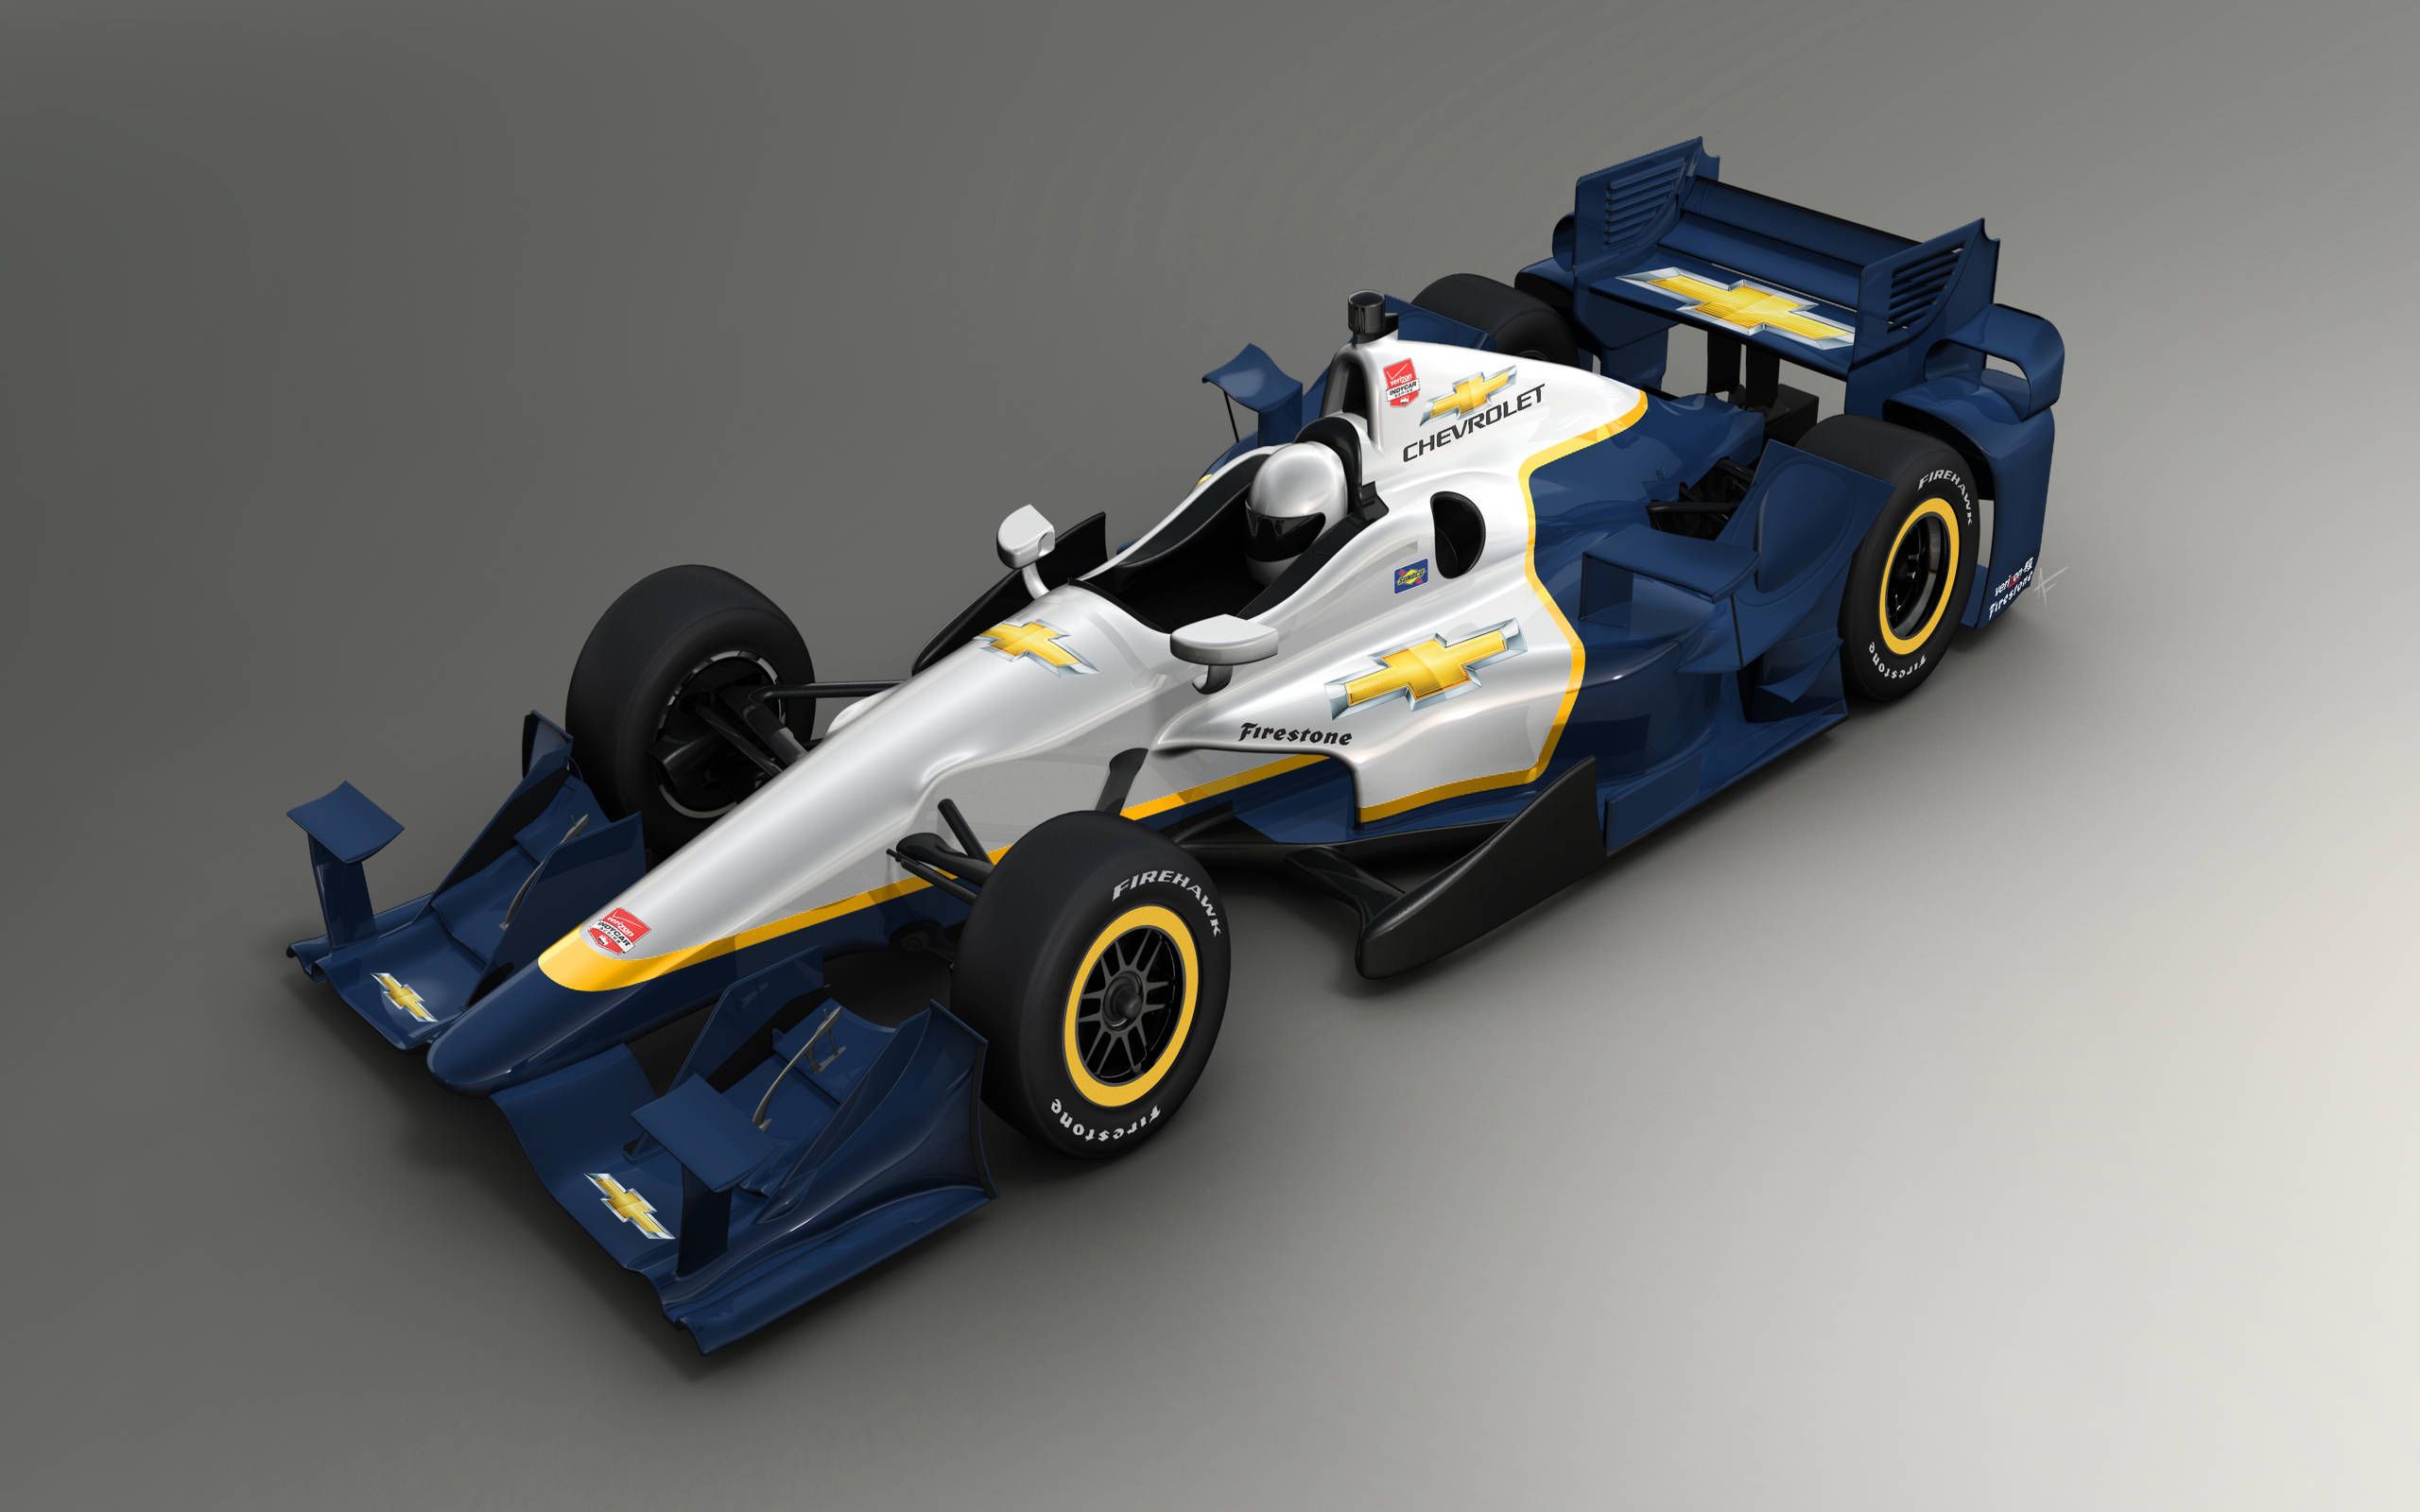 Chevrolet reveals IndyCar aero kit for 2015 season